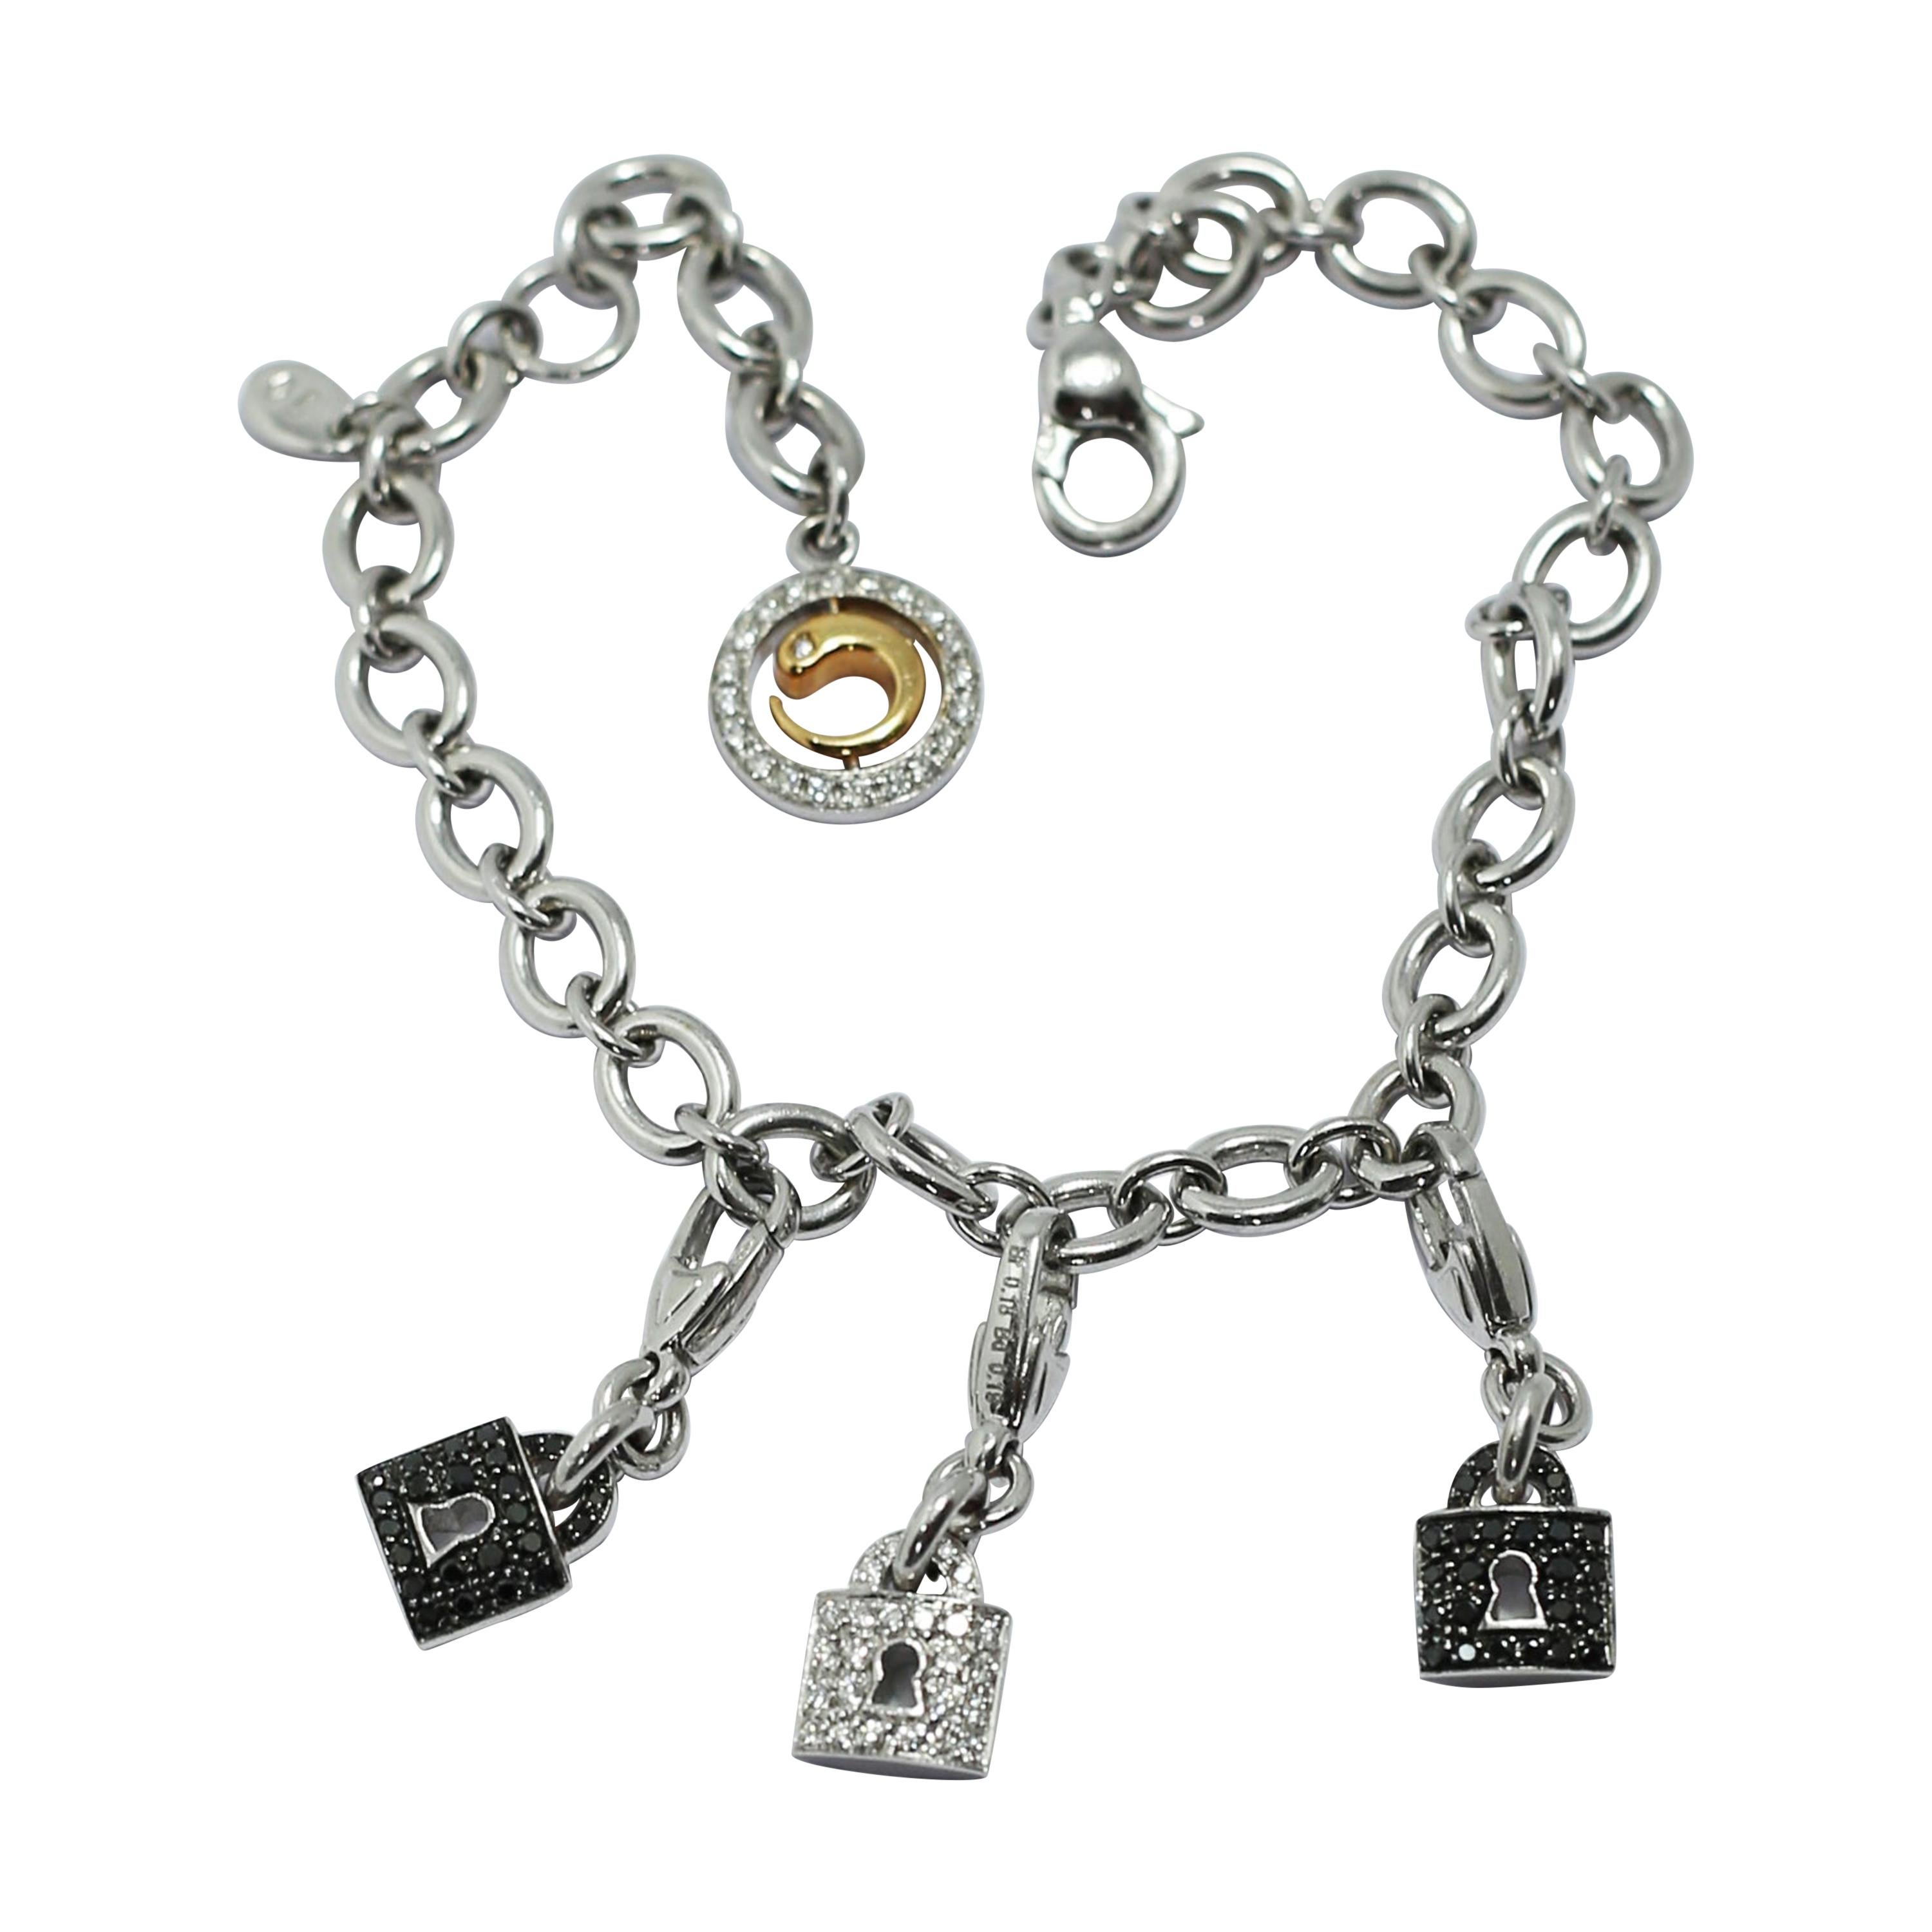 Crivelli Lock Charm Bracelet in 18 Karat White Gold and White and Black Diamonds